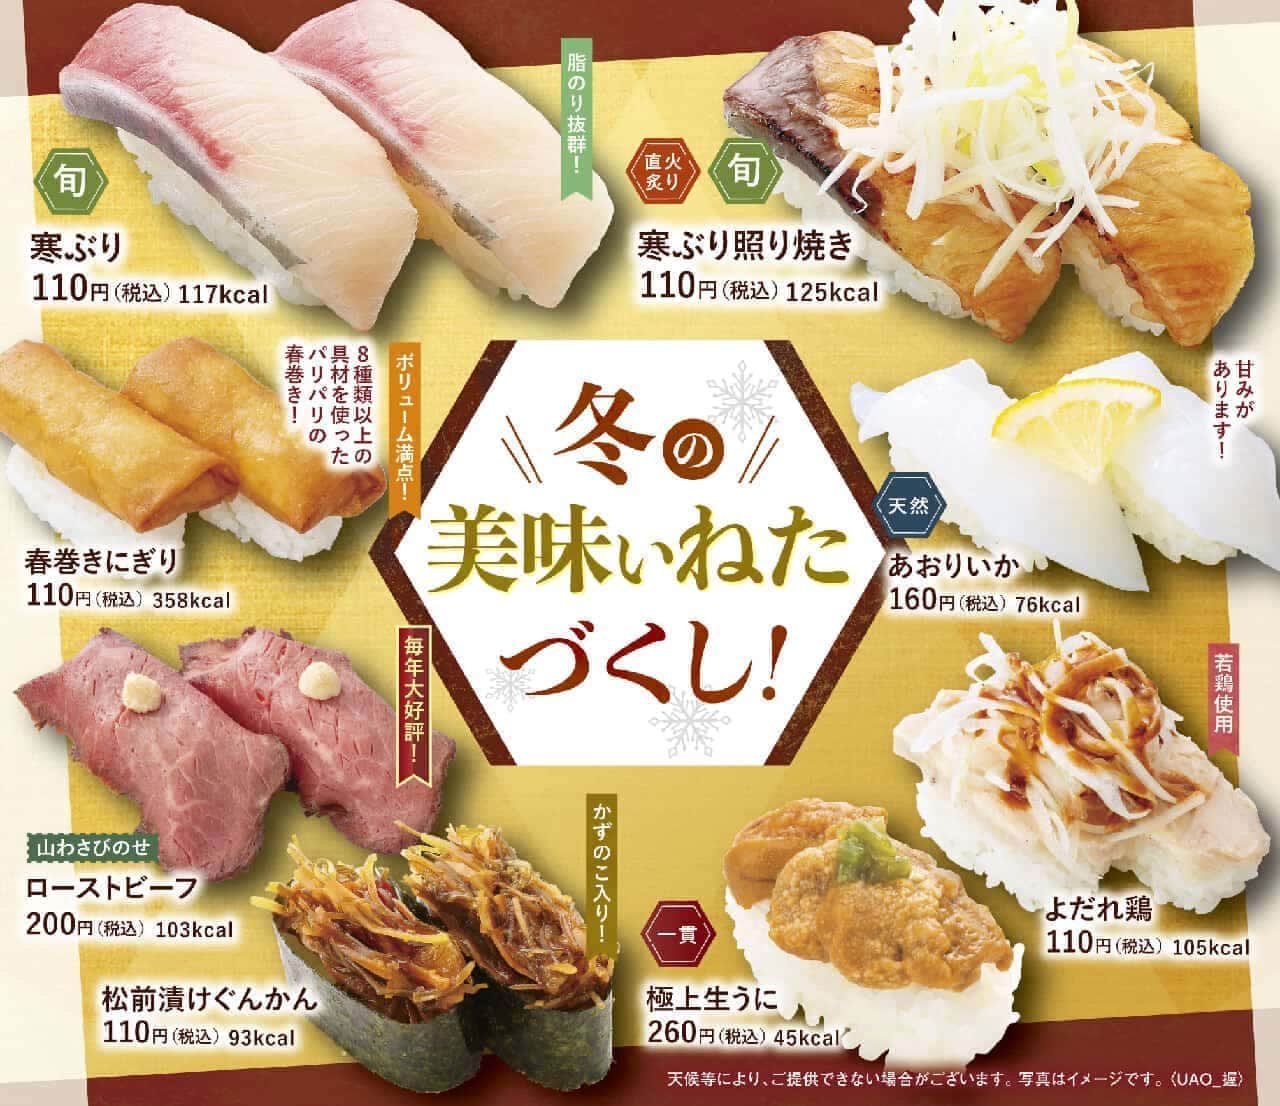 Genki Sushi / Uobei "Winter delicious sushi!"